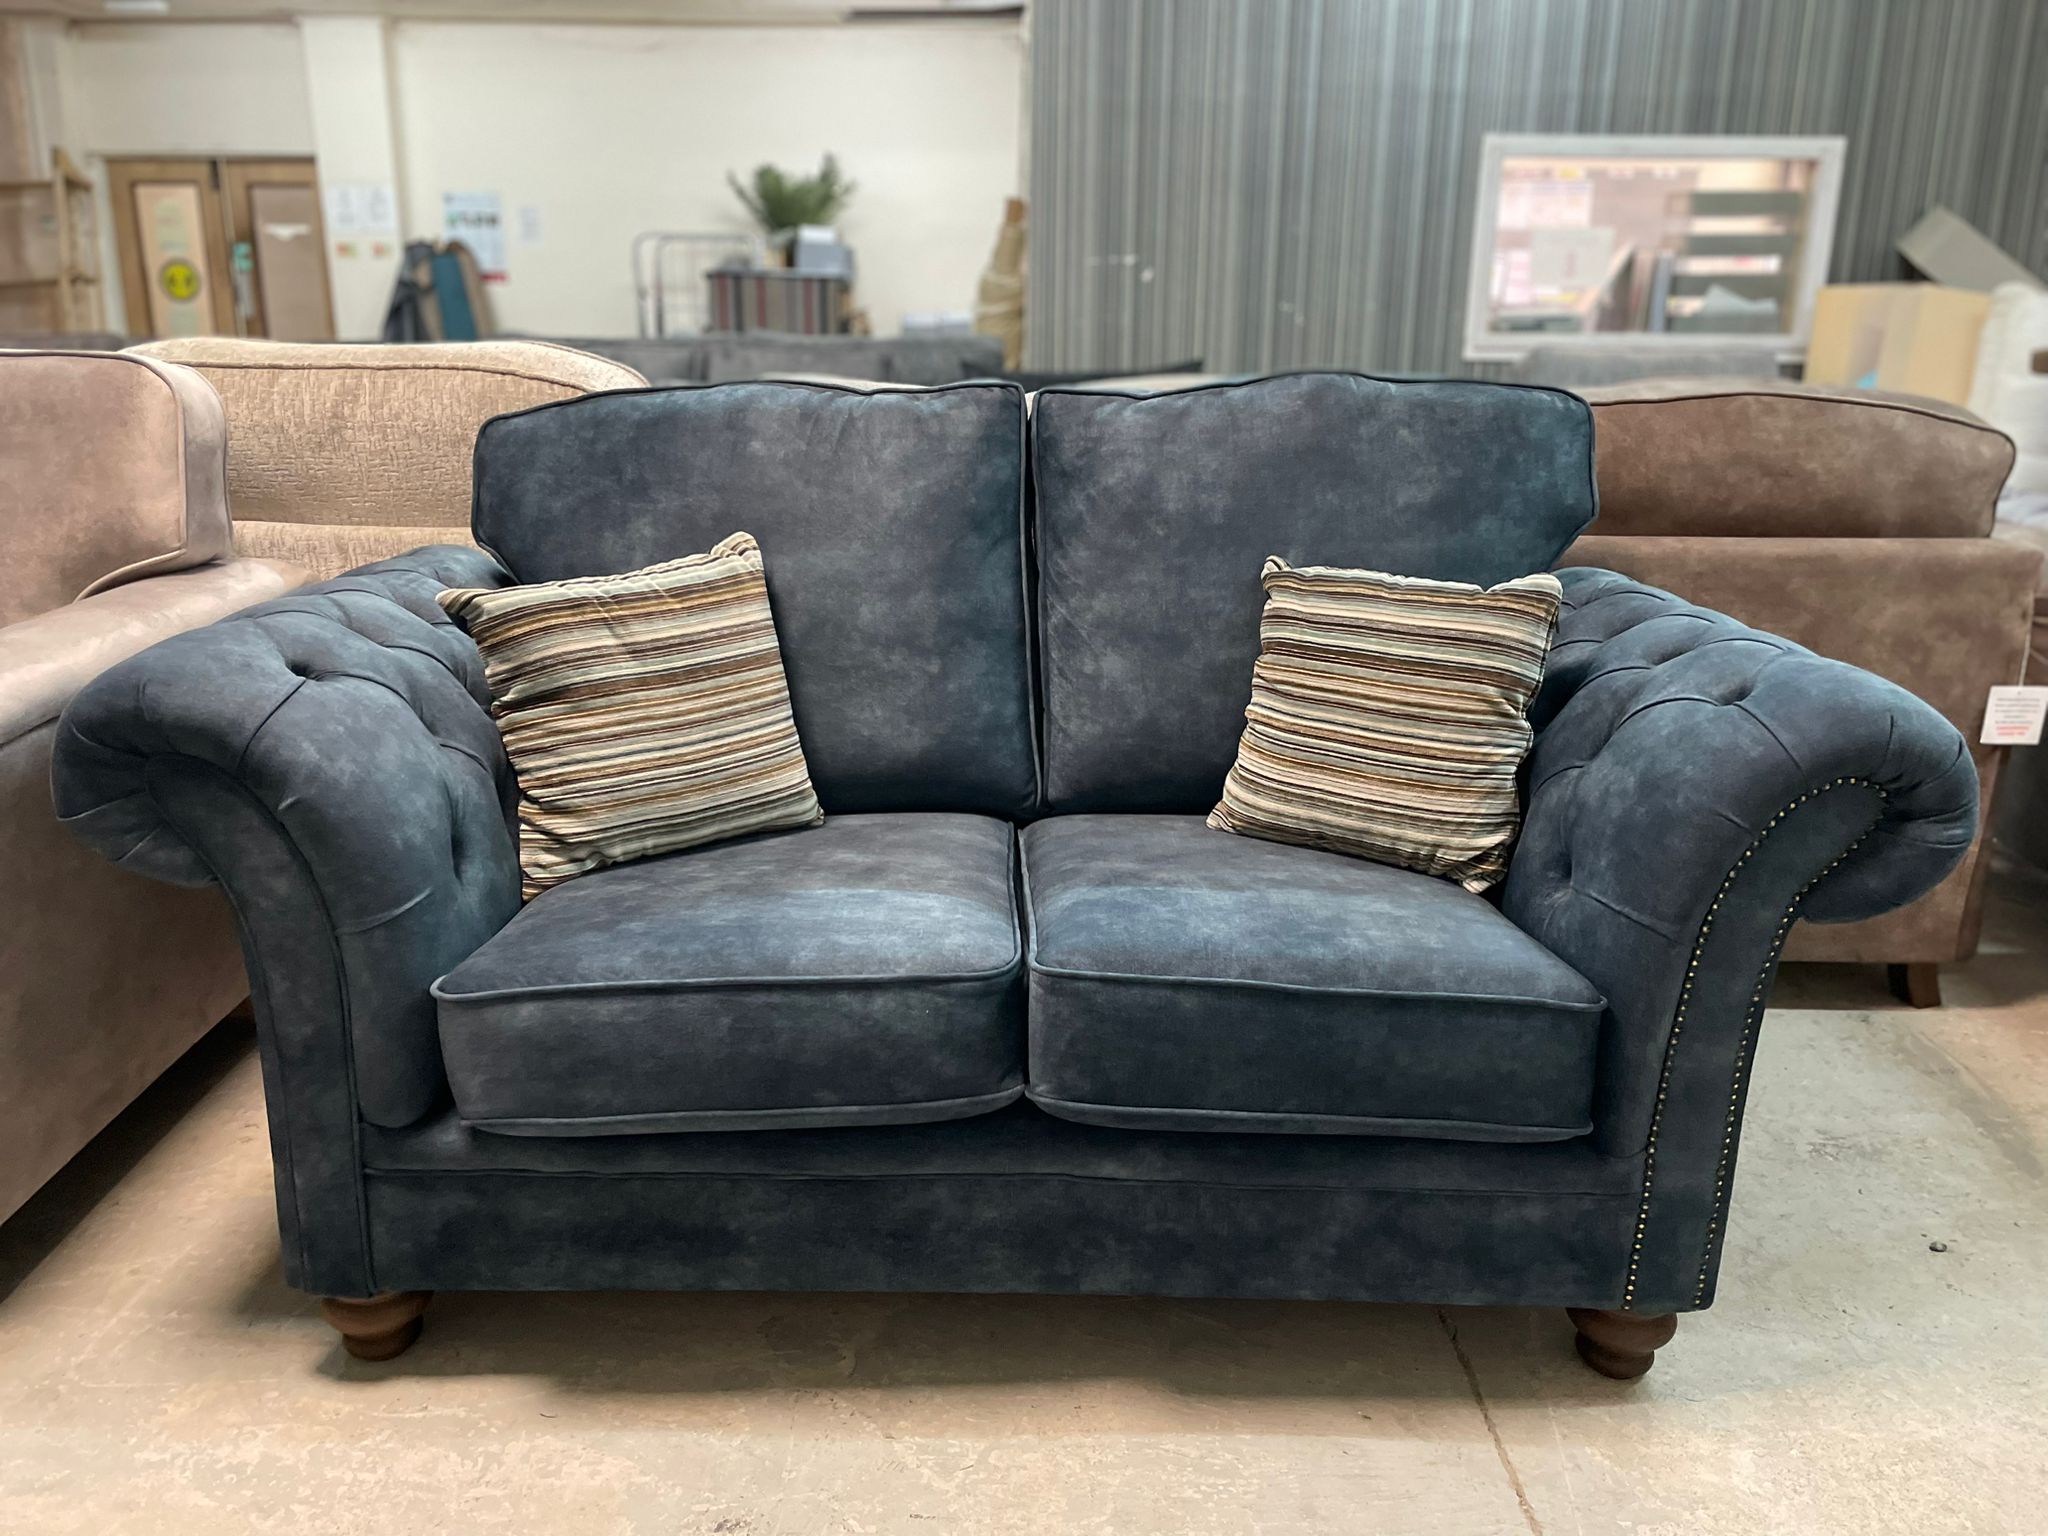 Buckingham fabric Sofa